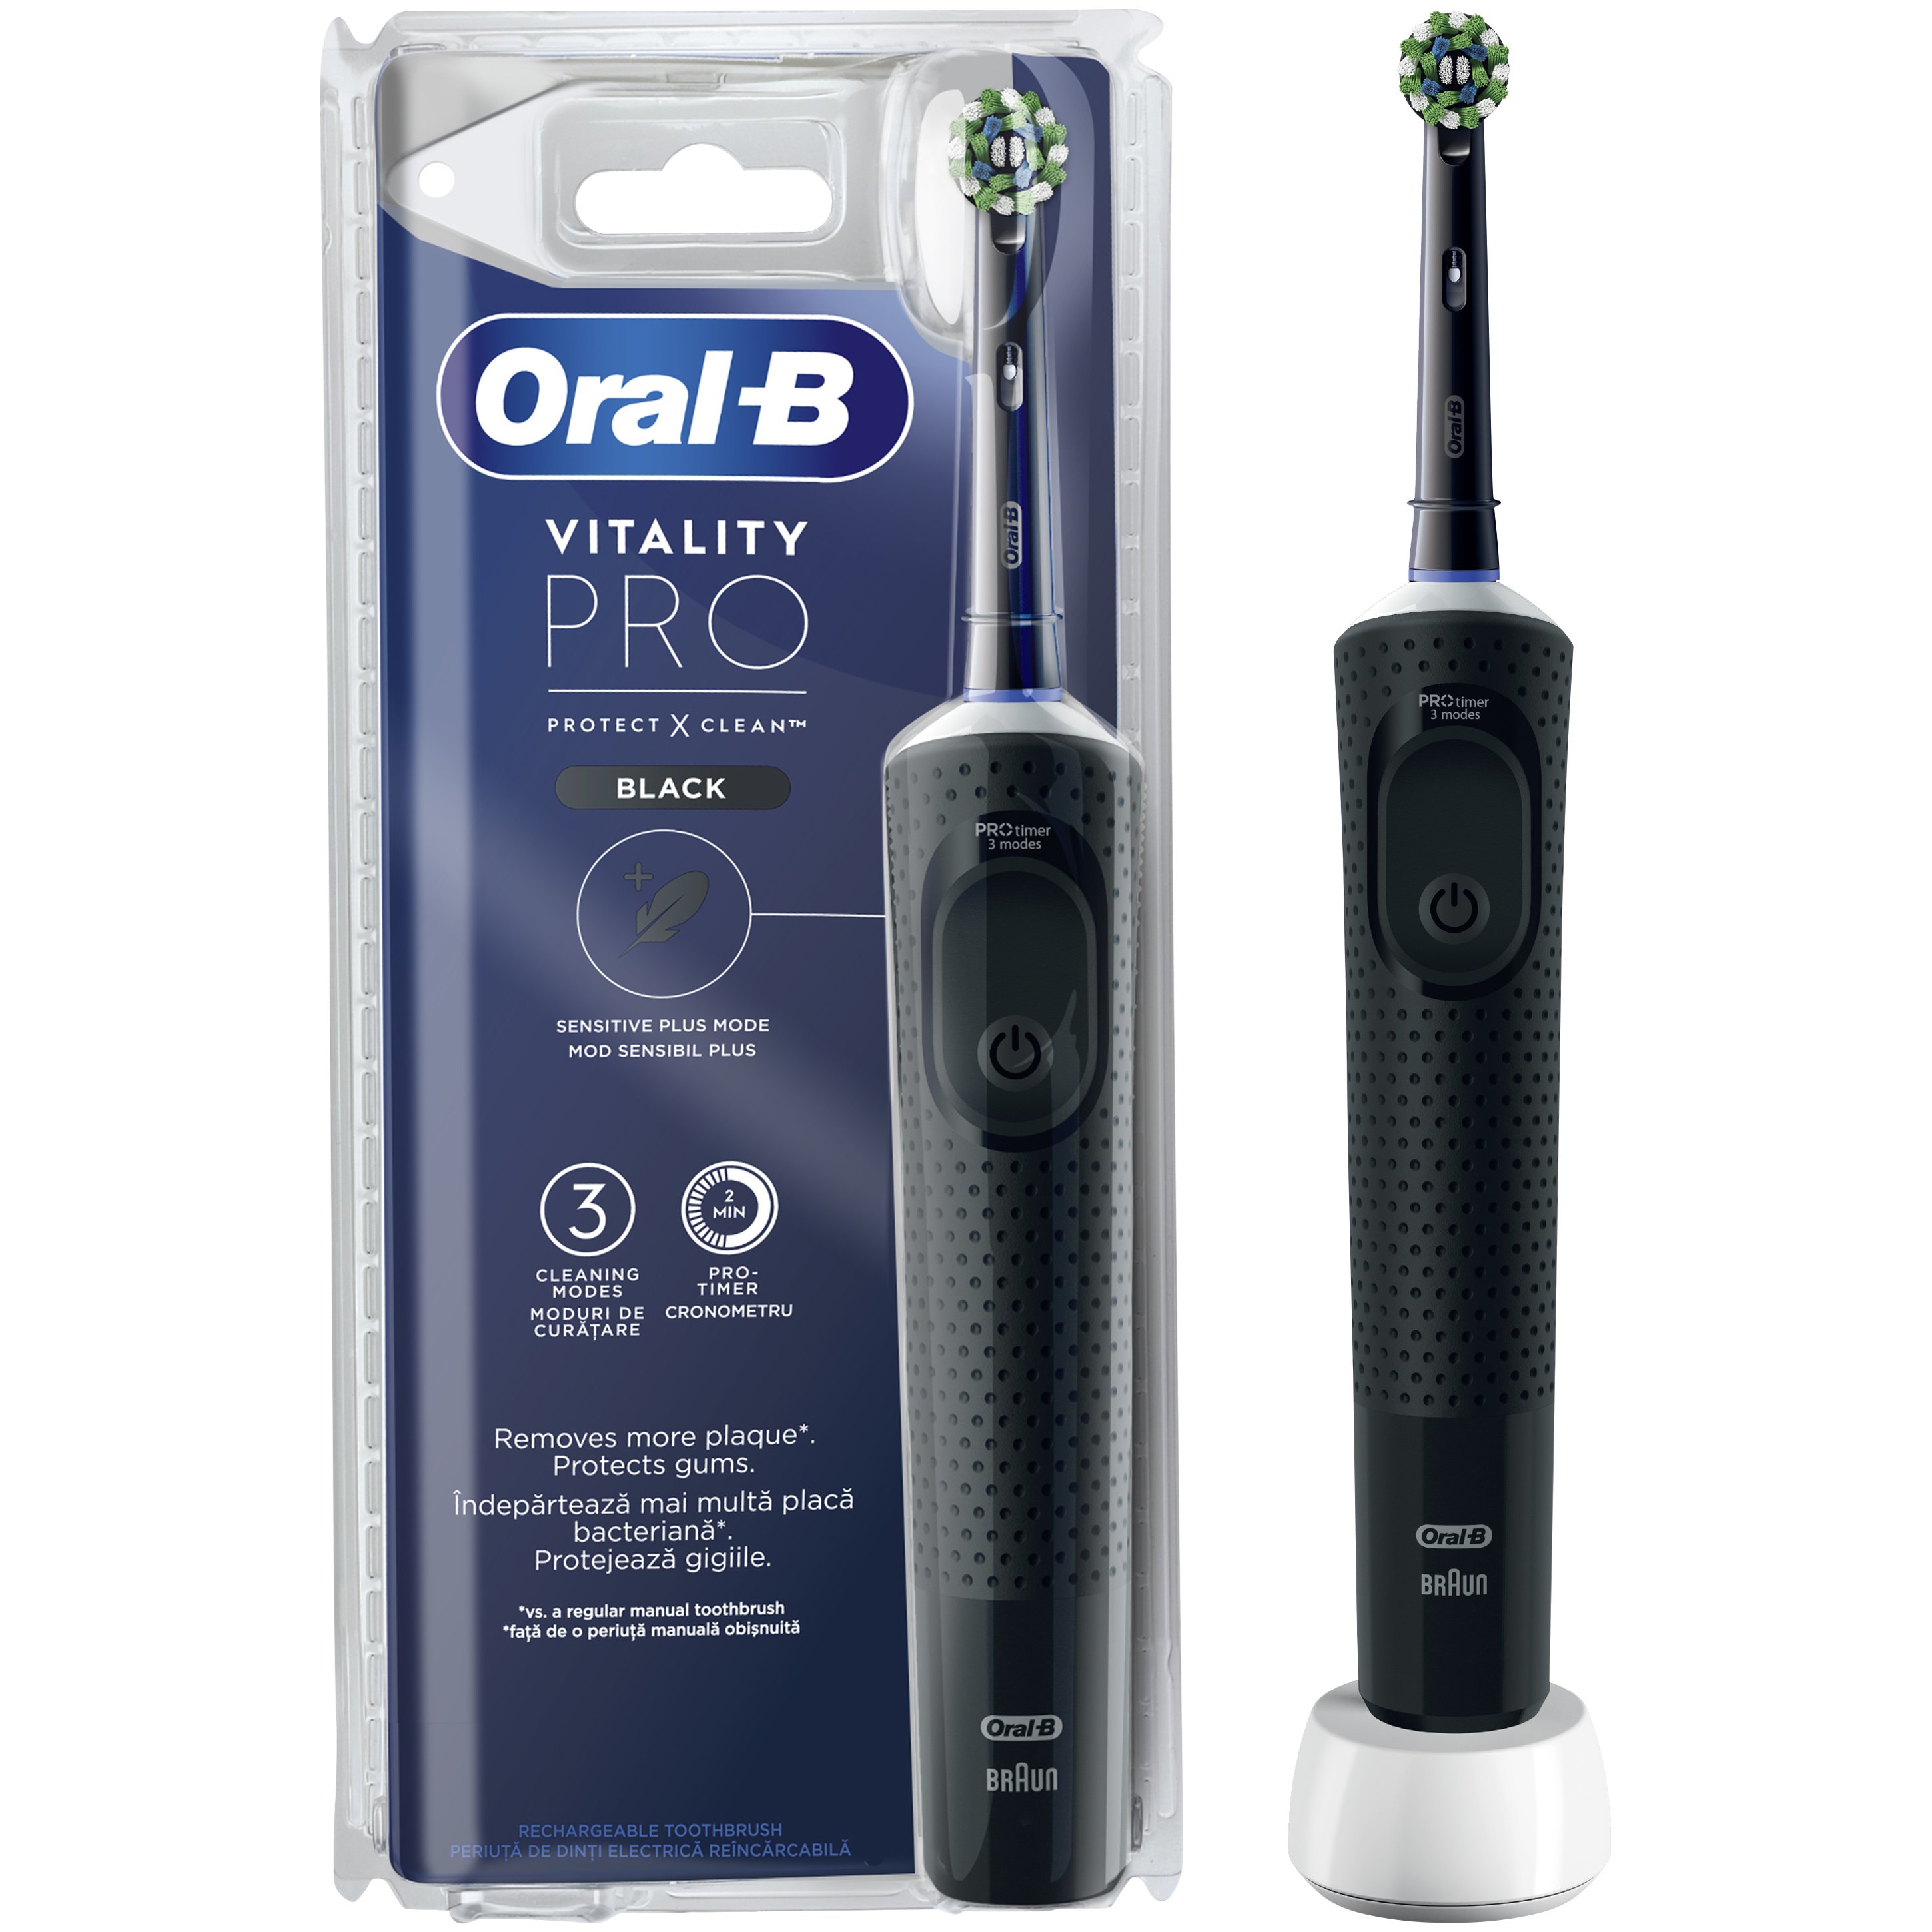 Oral-B Vitality Pro Protect X Clean Επαναφορτιζόμενη Ηλεκτρική Οδοντόβουρτσα με 3 Προγράμματα Βουρτσίσματος από την Braun 1 Τεμάχιο – Black